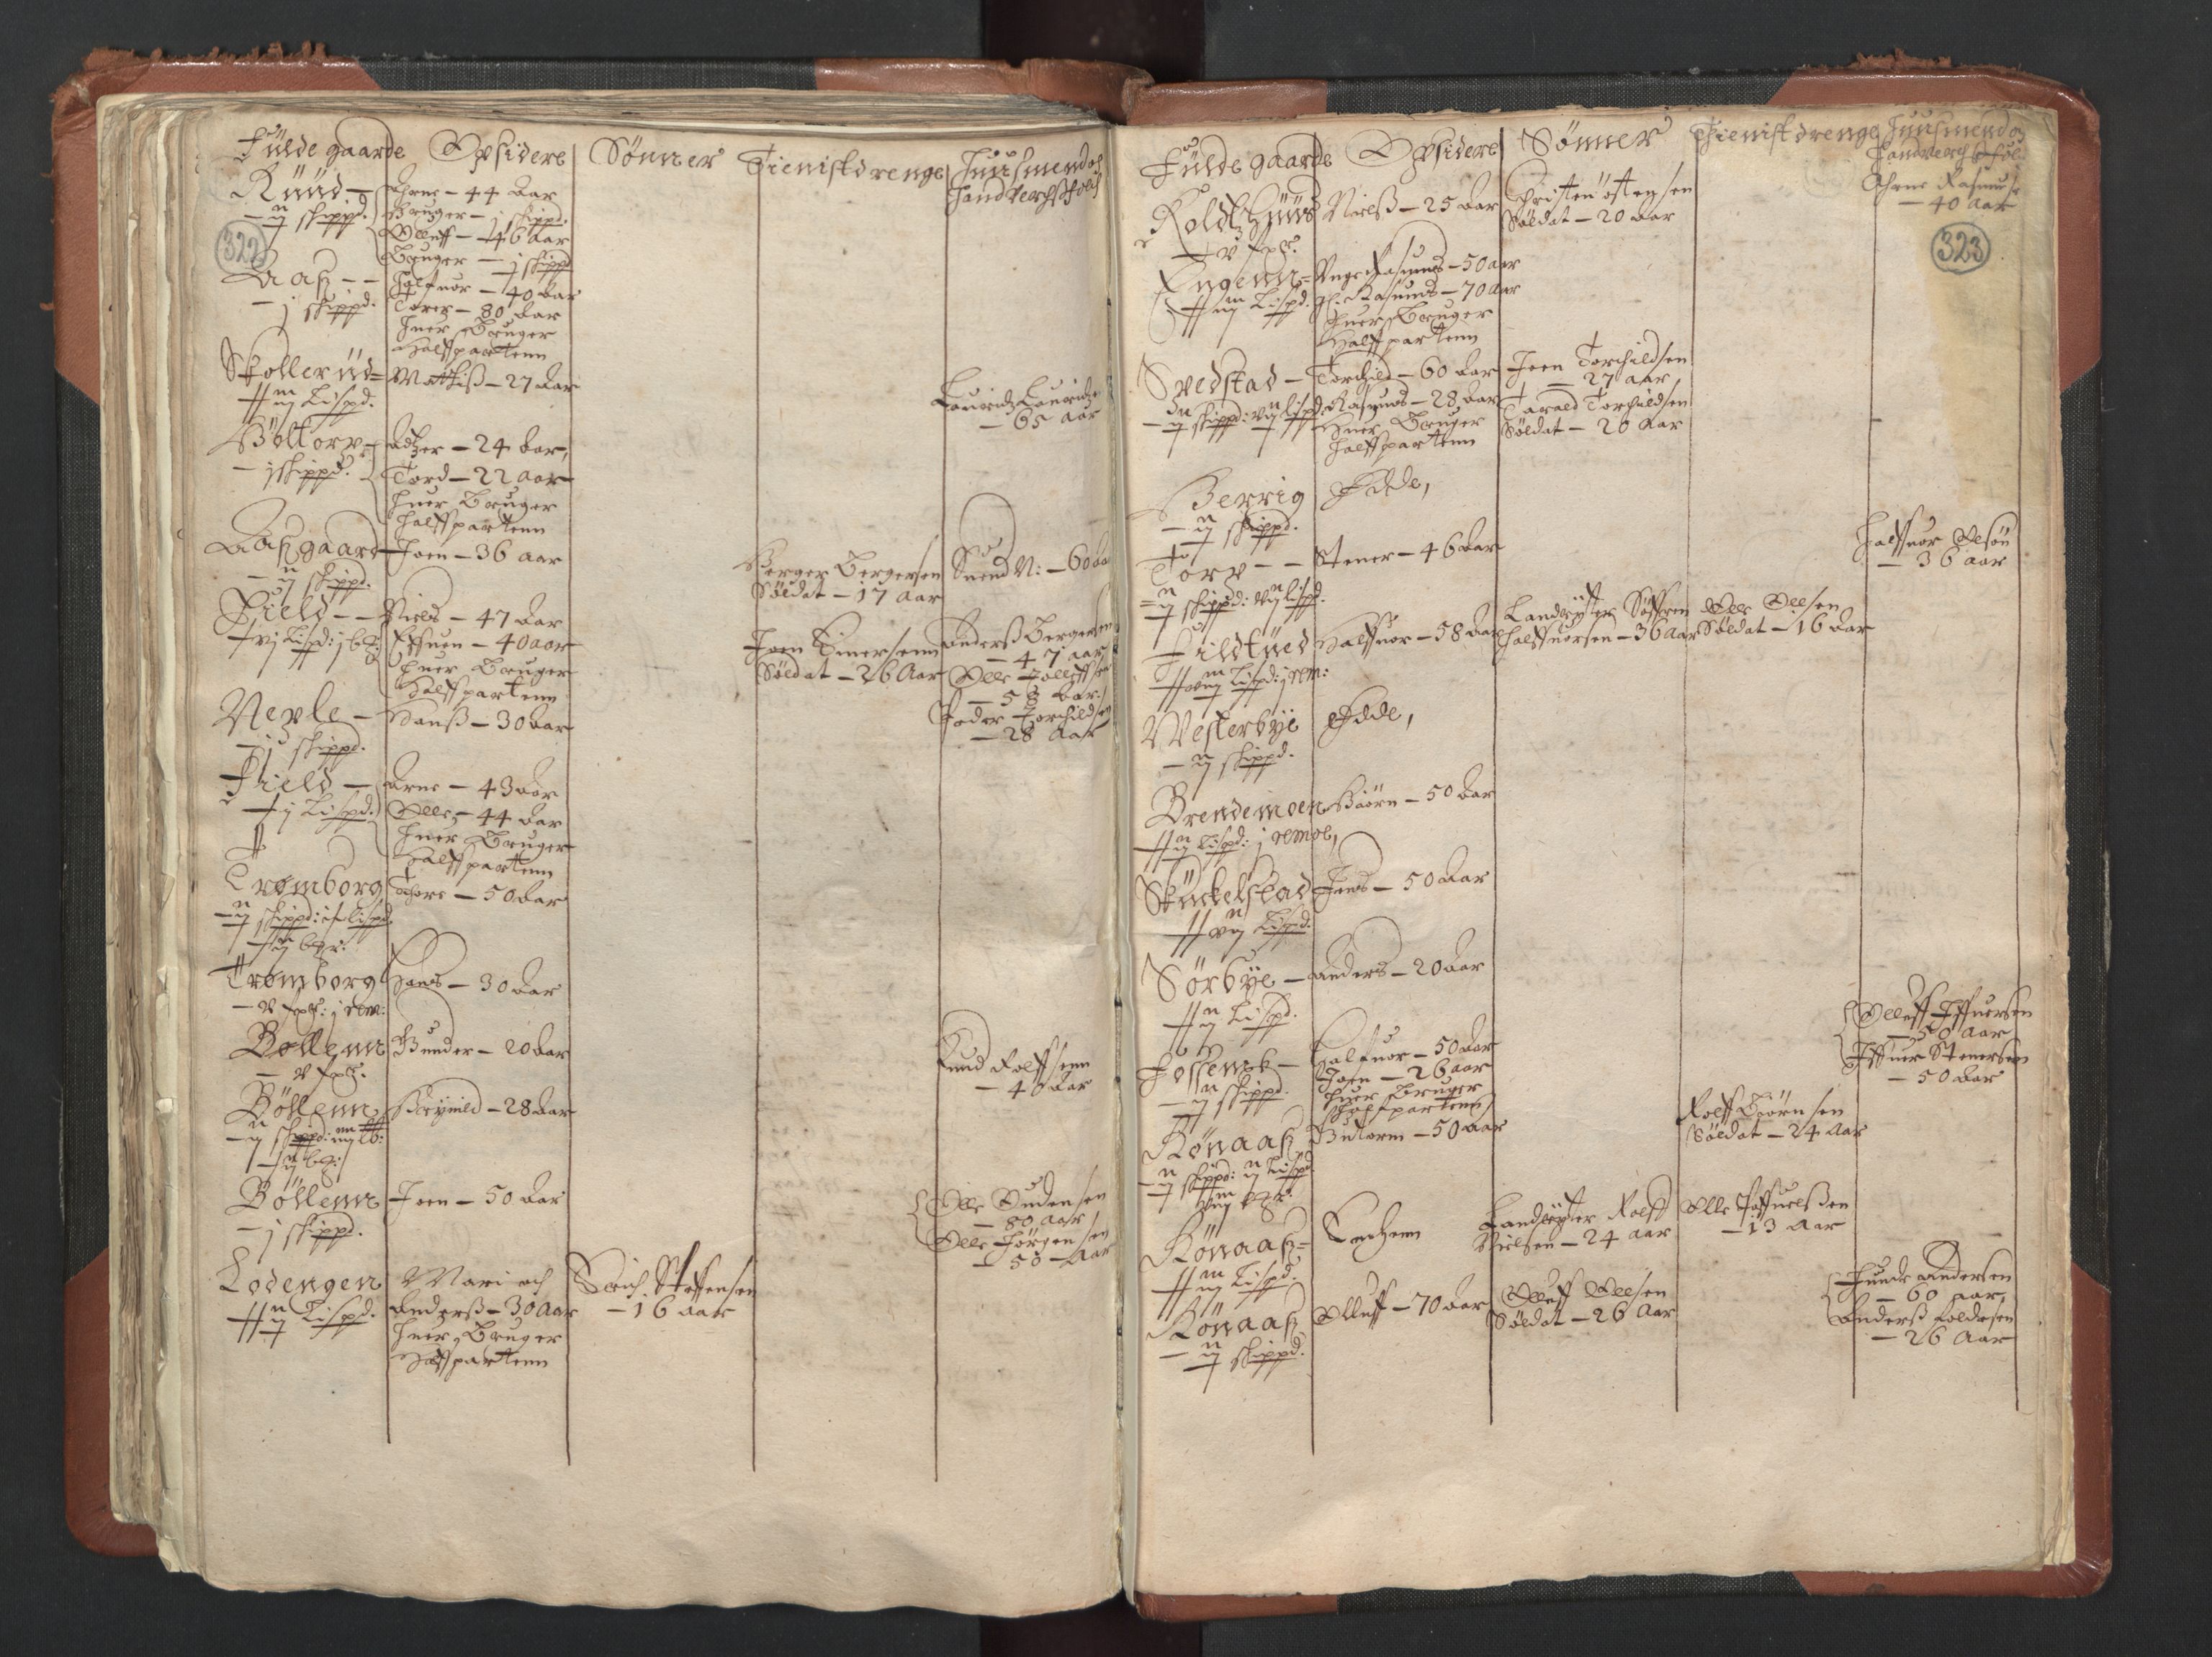 RA, Fogdenes og sorenskrivernes manntall 1664-1666, nr. 1: Fogderier (len og skipreider) i nåværende Østfold fylke, 1664, s. 322-323